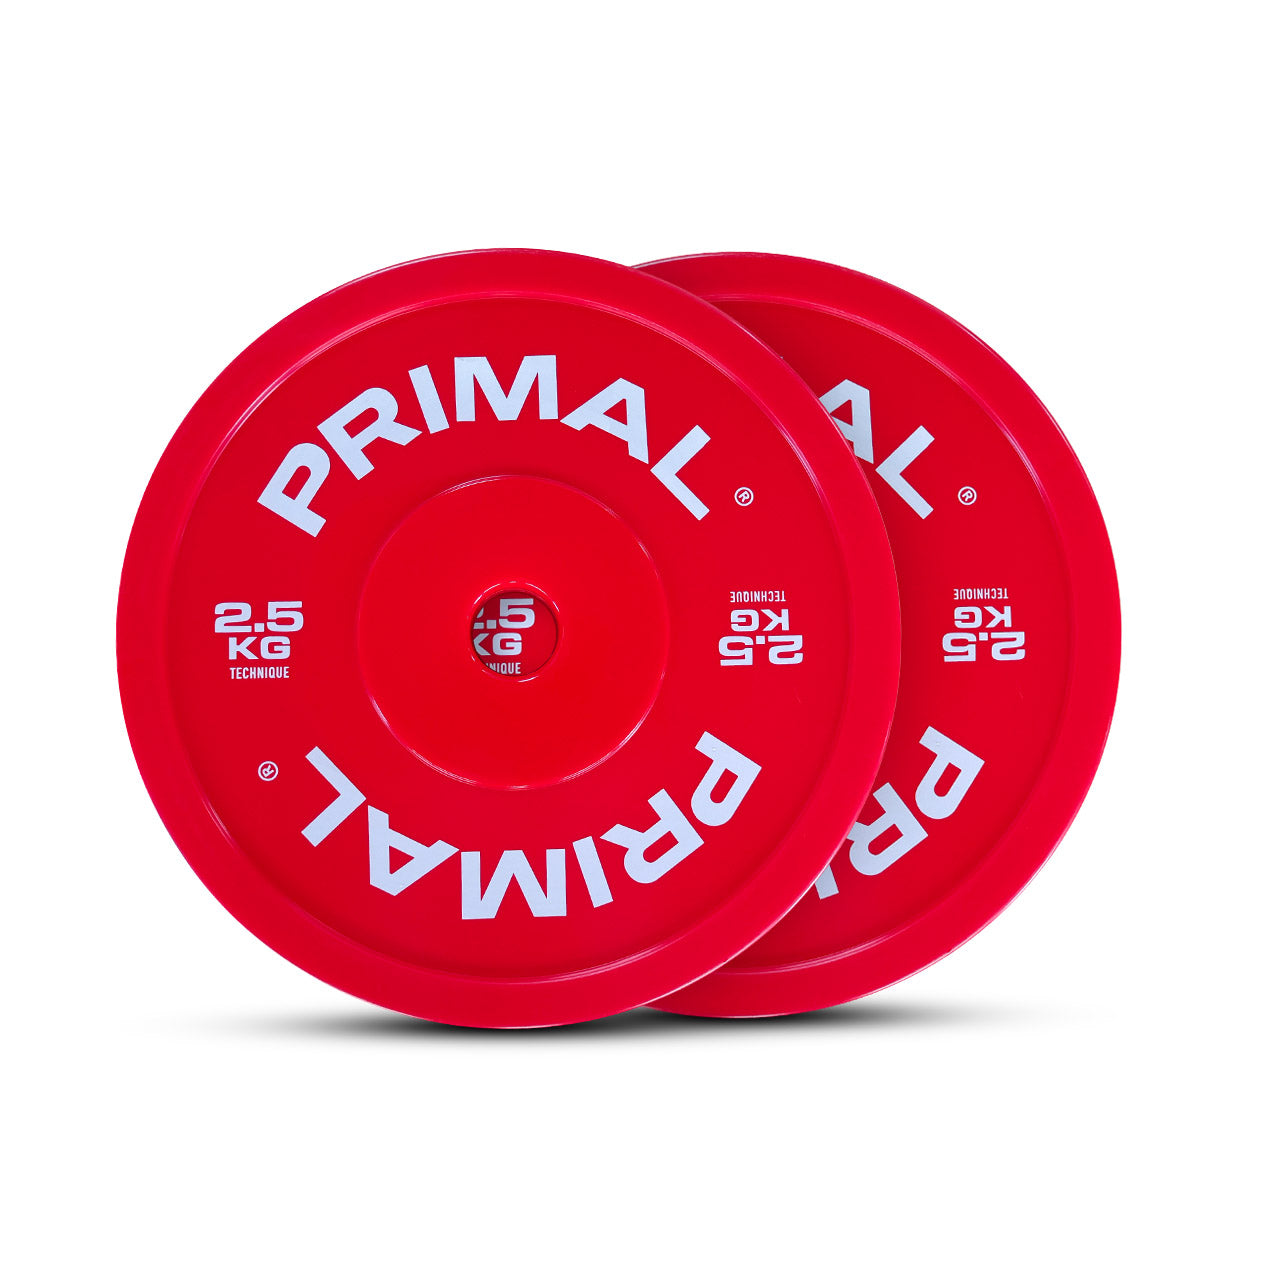 Primal Performance Series Technique Weight Plates - 2.5kg (PAIR)